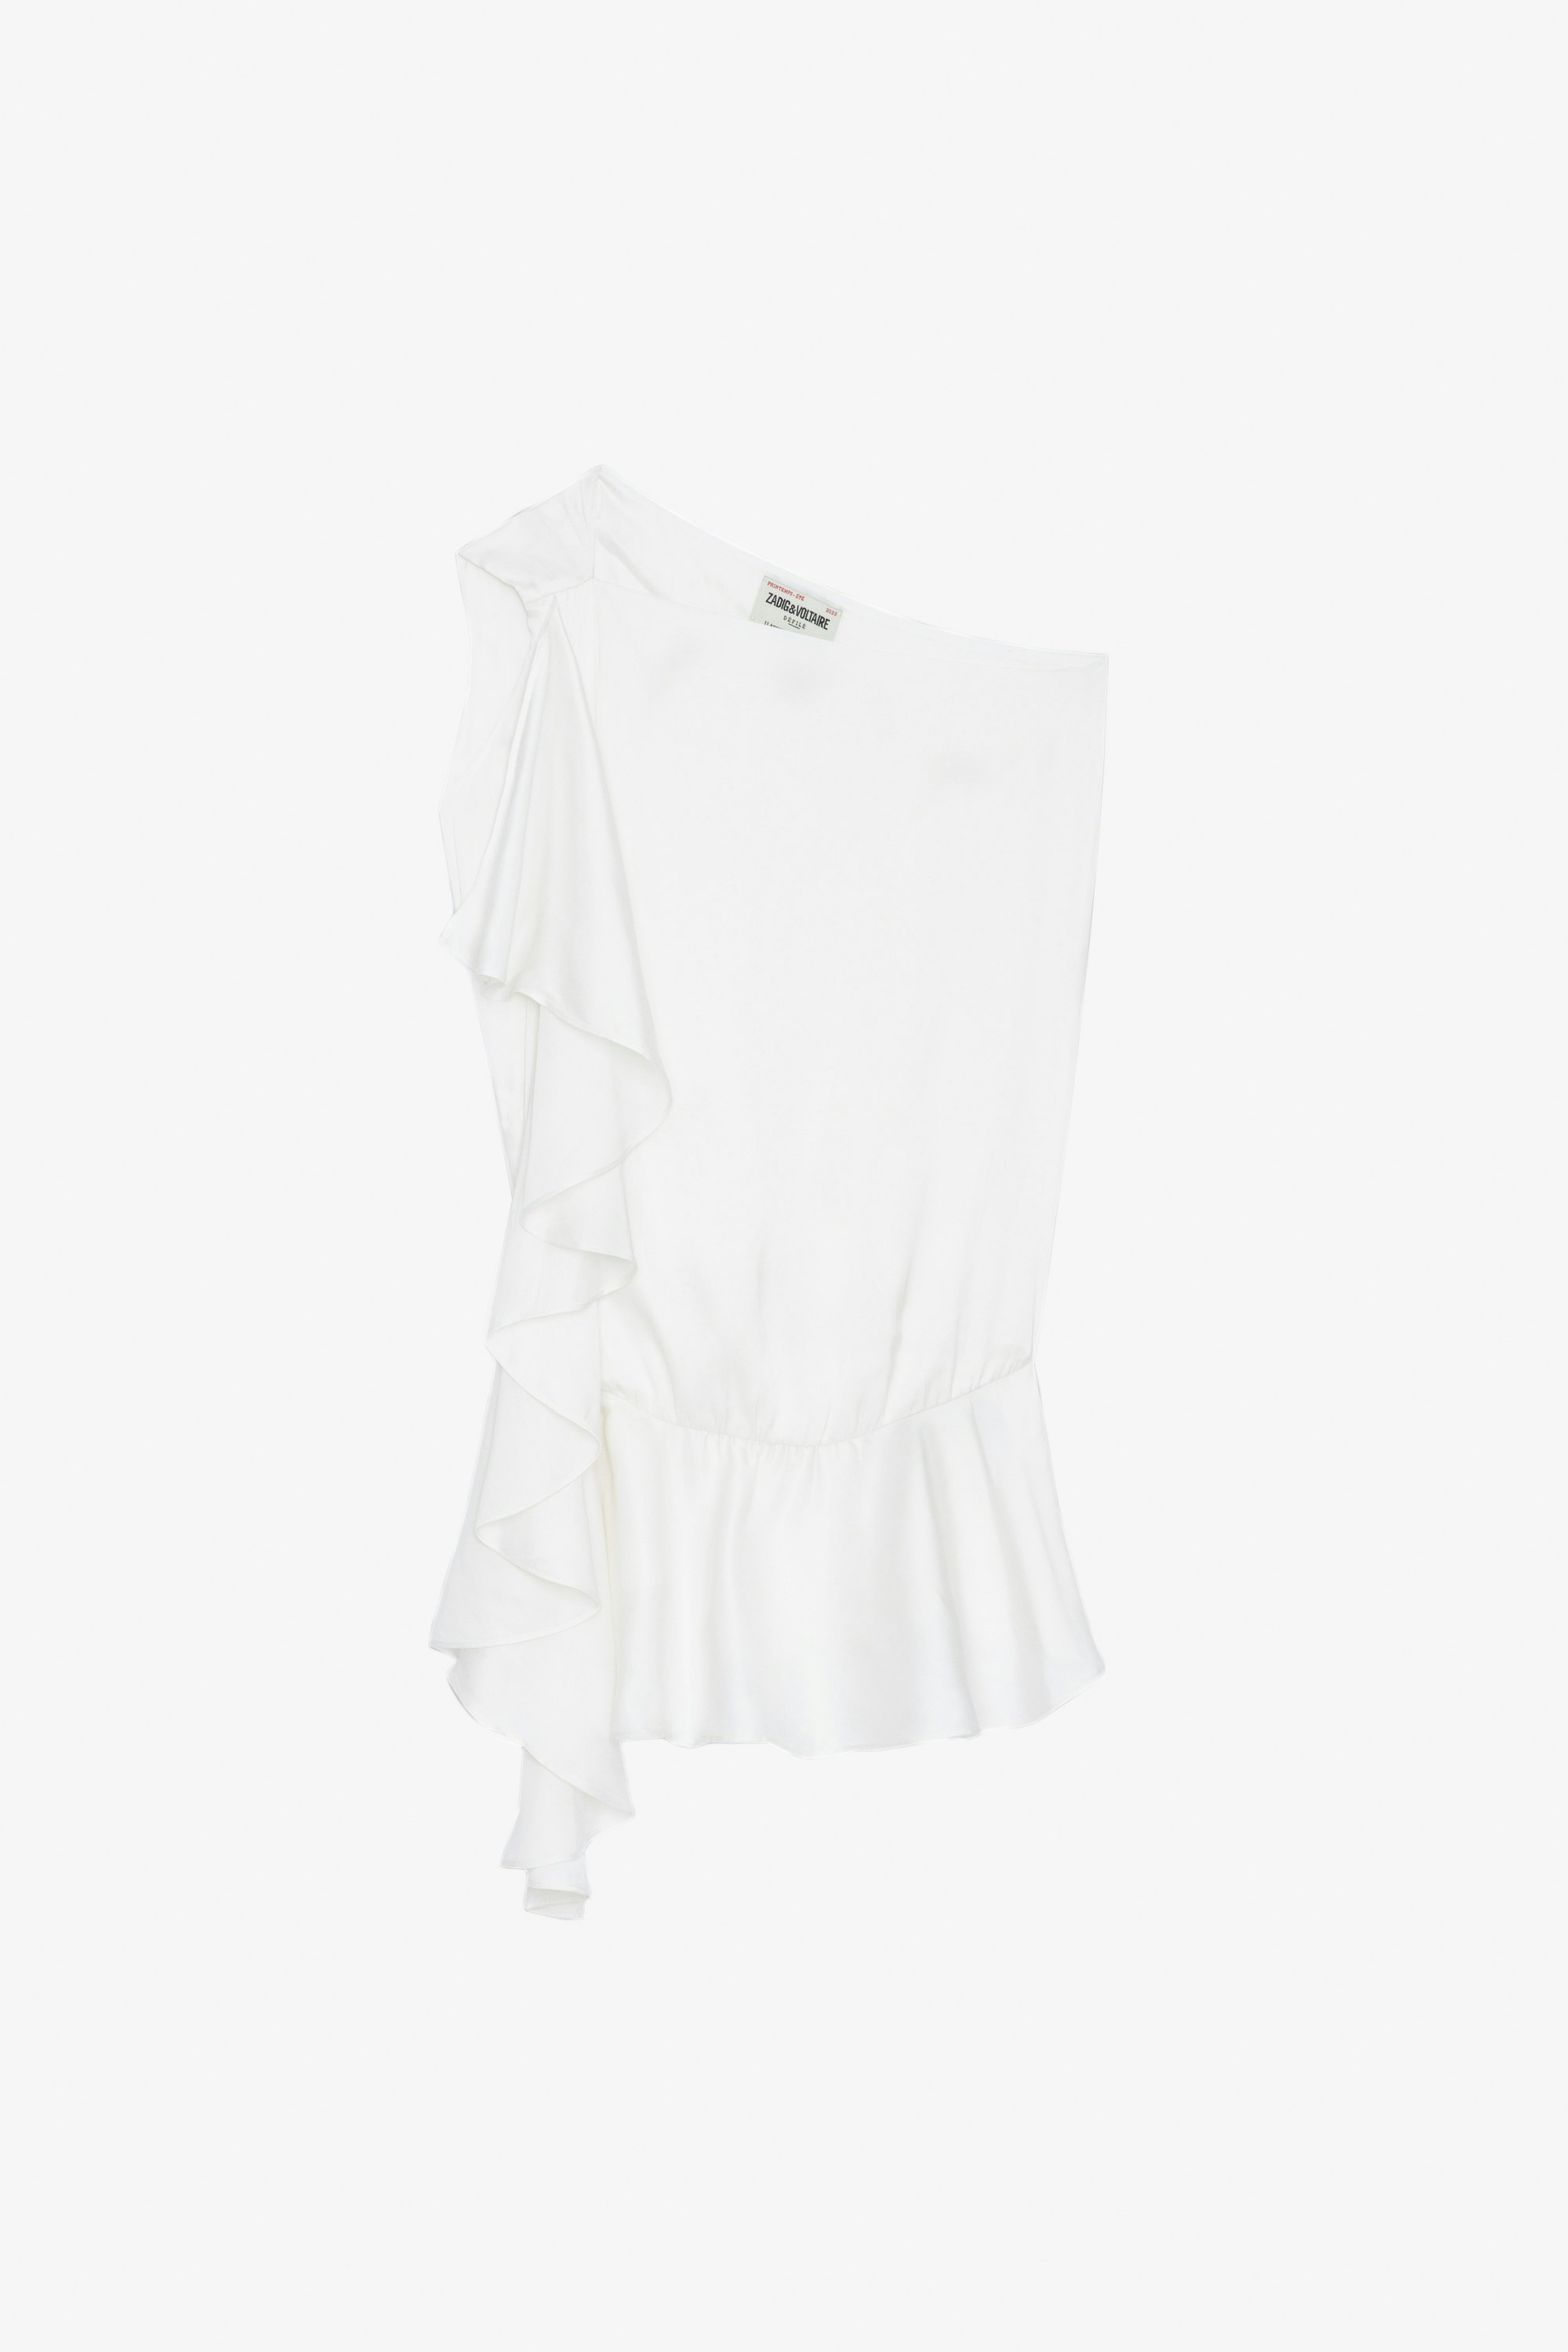 Tic Satin Top Women's asymmetrical draped off-white satin top